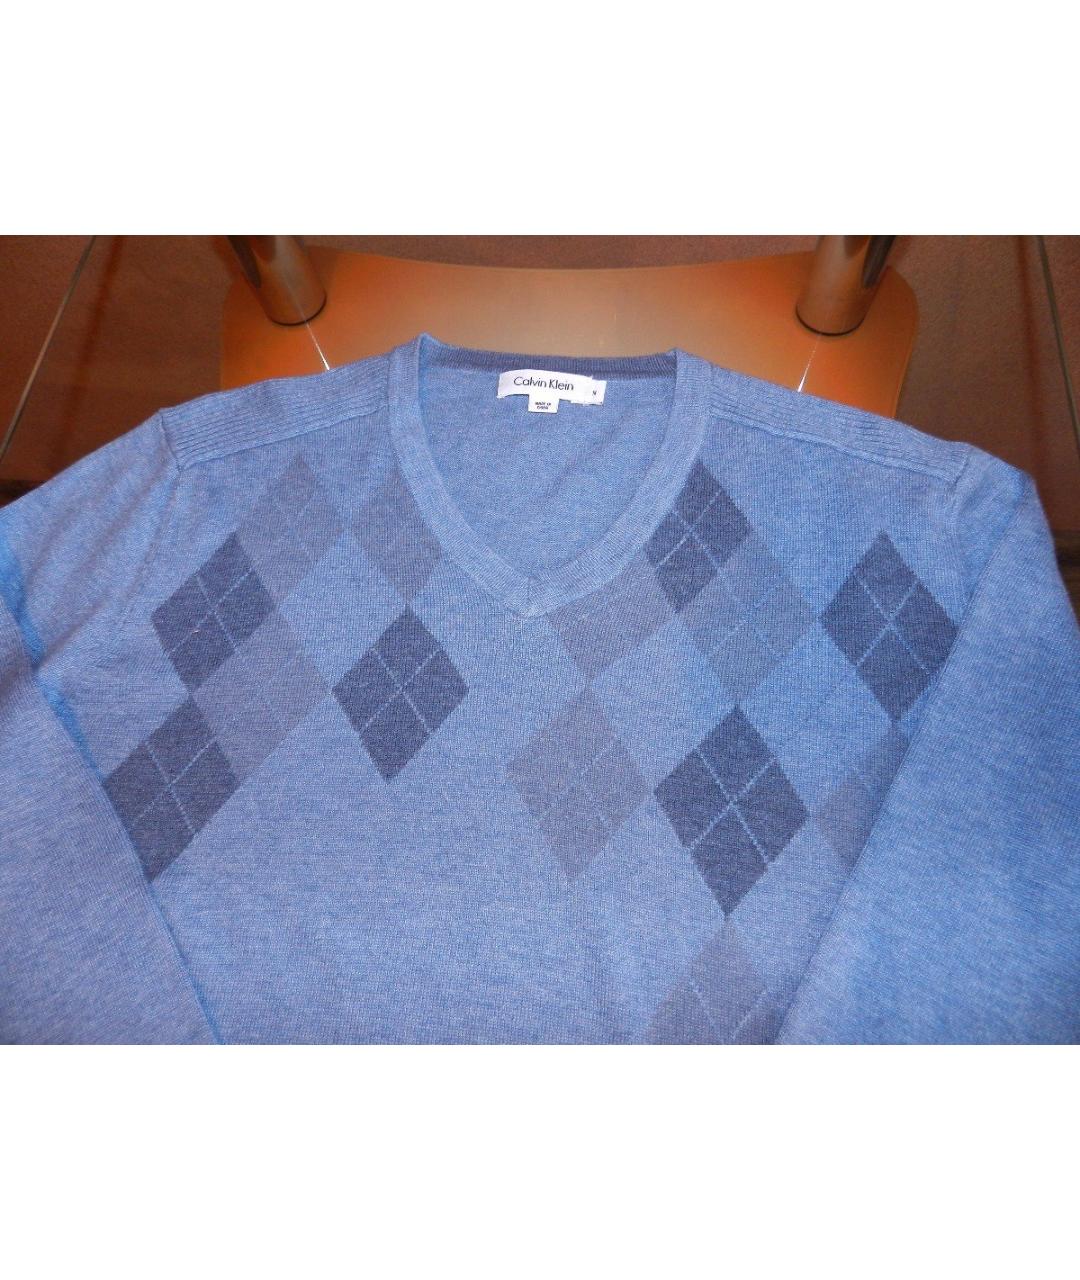 CALVIN KLEIN Голубой хлопковый джемпер / свитер, фото 2